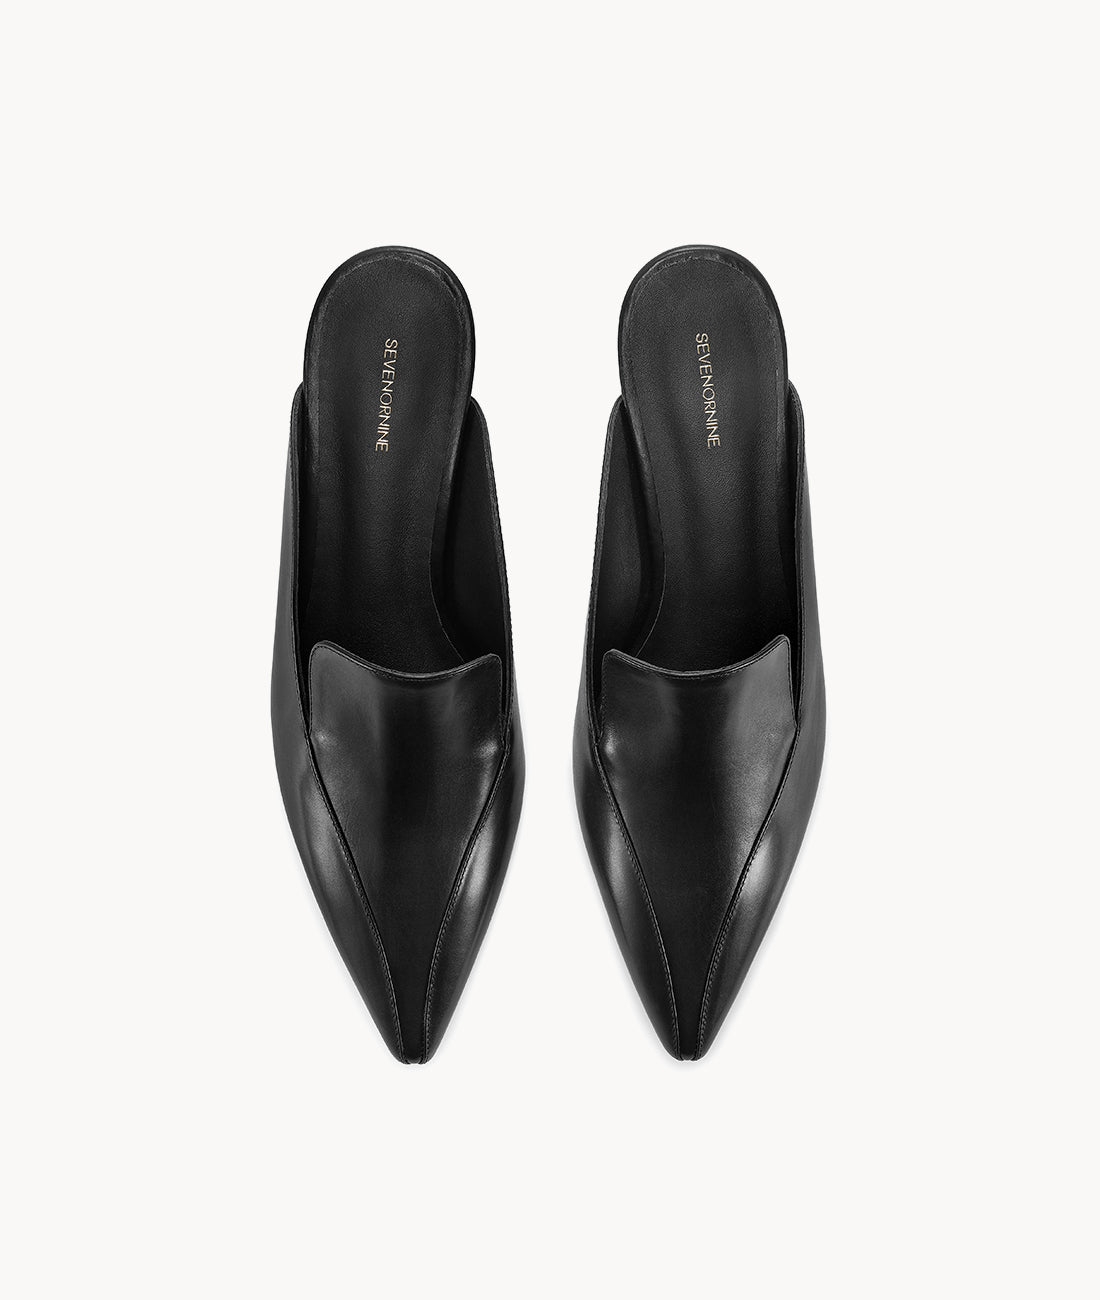 7or9 Black Label Series  High-end Comfortable Black Calfskin  Leather Heels for Women 35 mm/1.38" Kitten Heels - New Moon 4.0